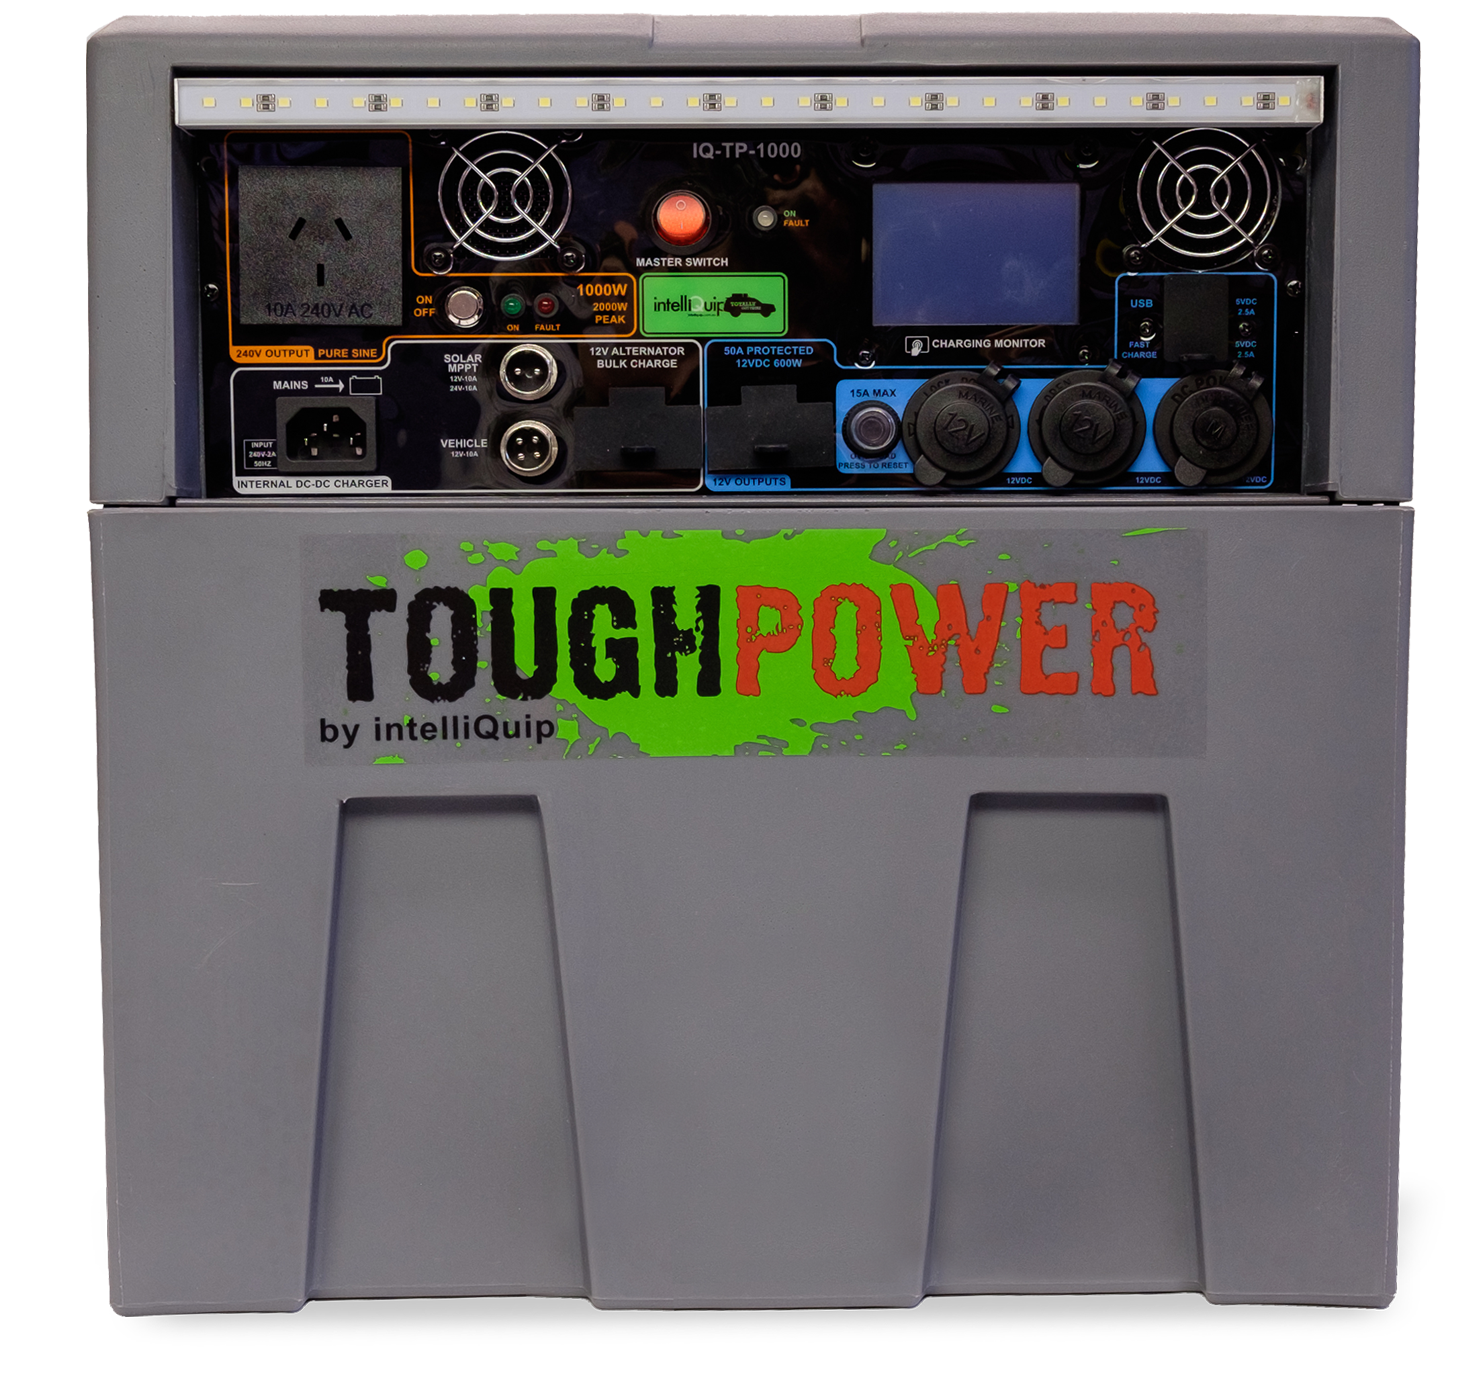 Toughpower and coffee pod machine